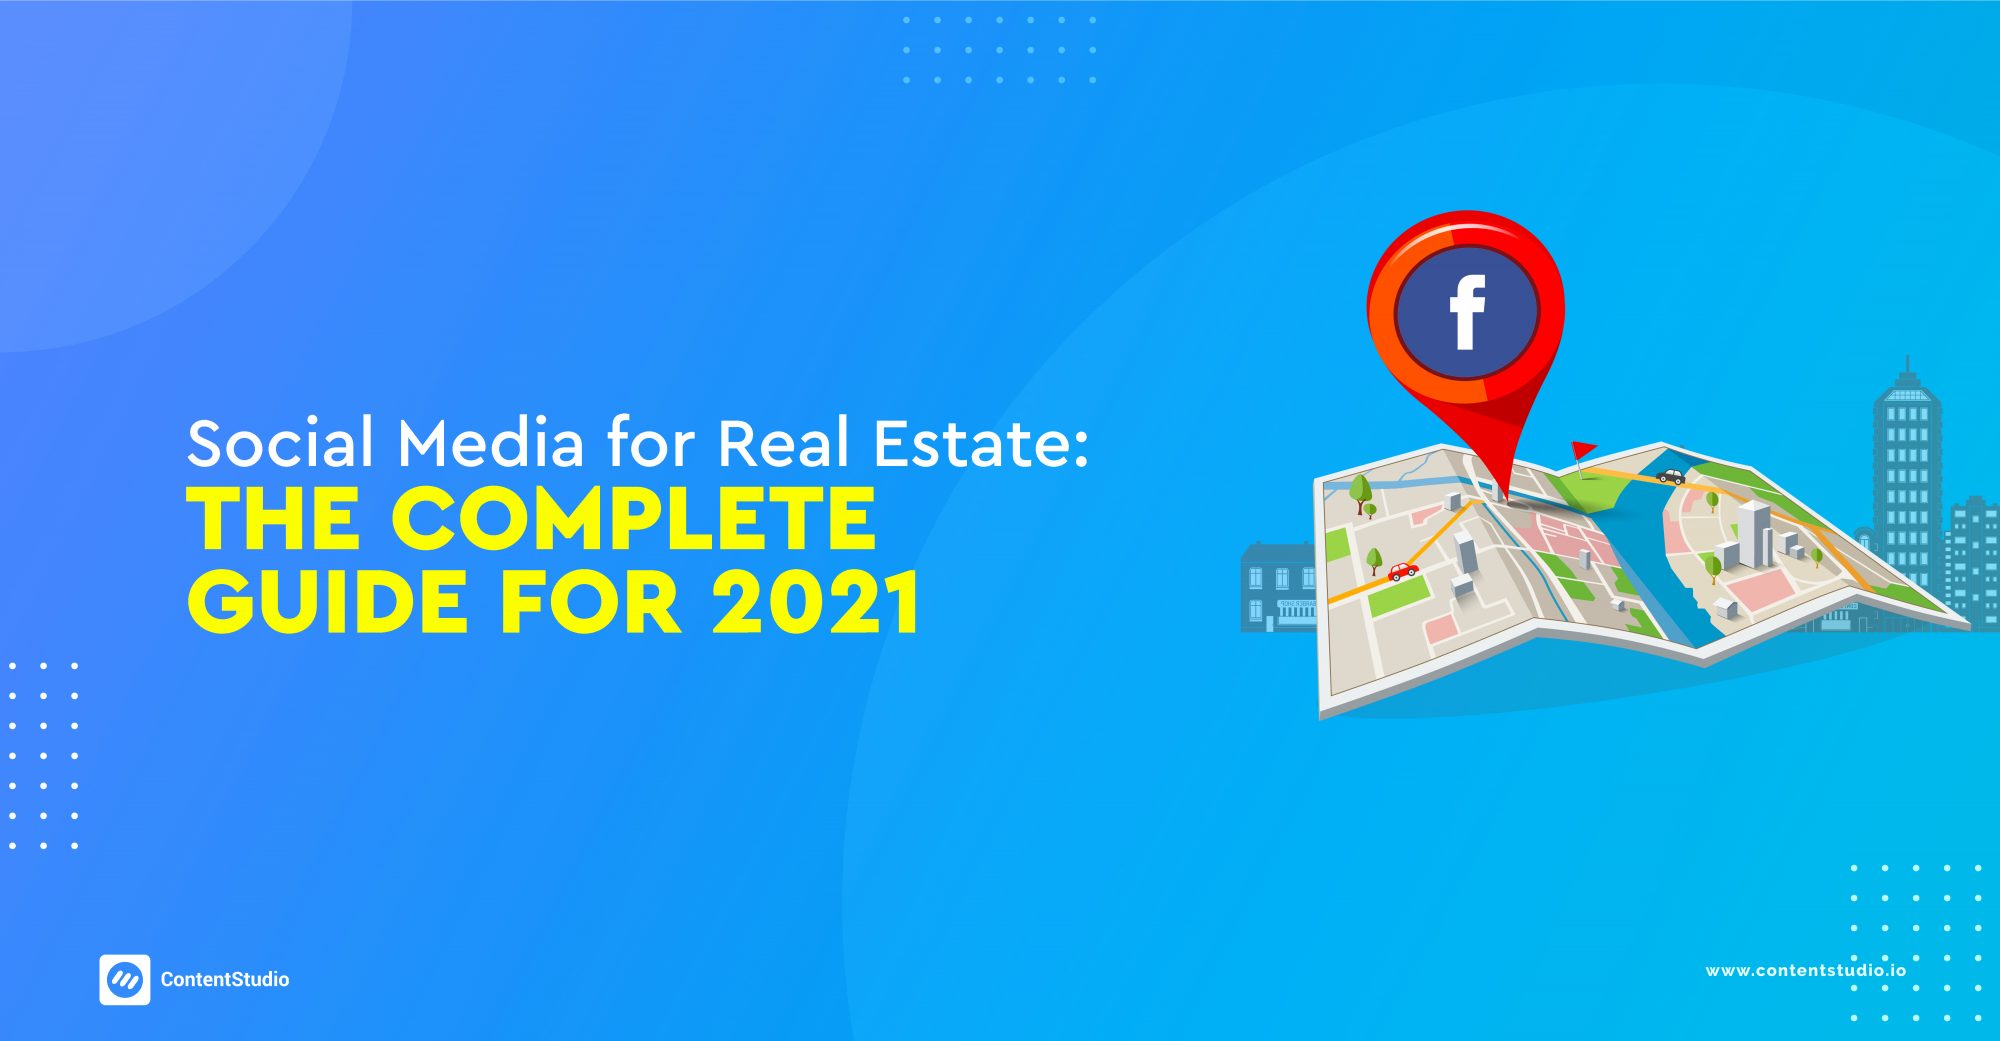 Social Media for Real Estate 2021